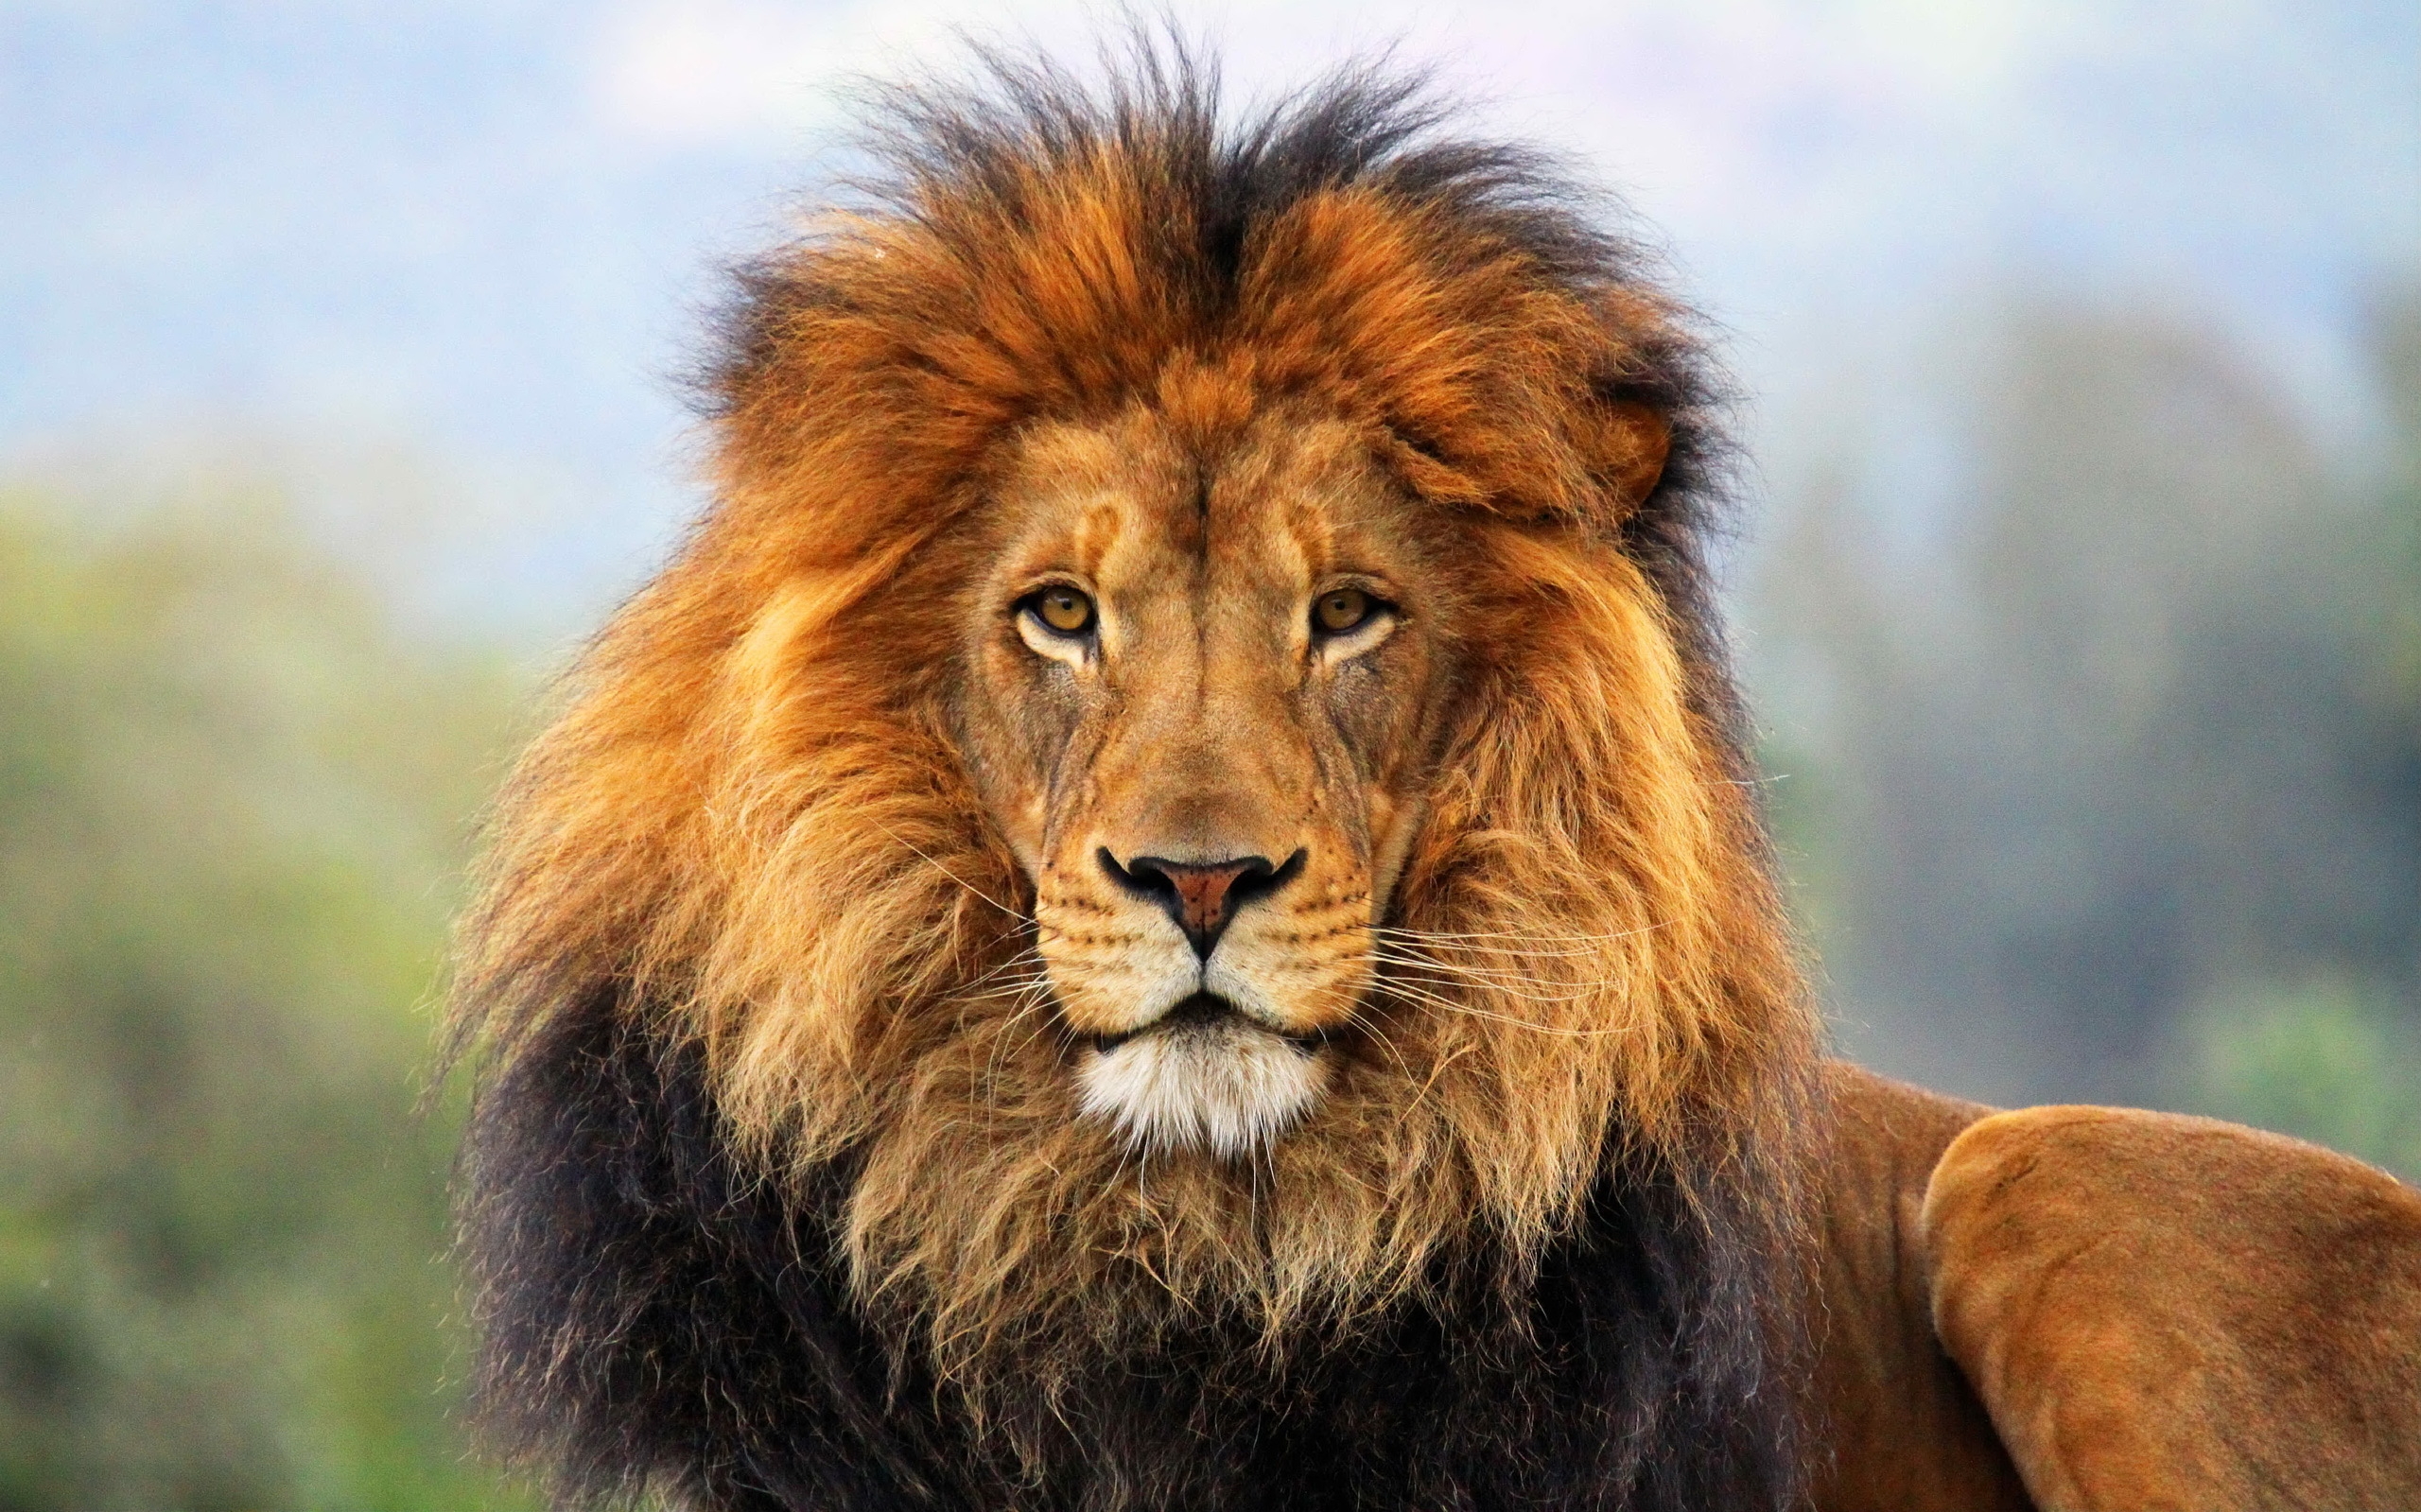 79761 descargar imagen un leon, animales, león, depredador, gato grande, visión, opinión, melena, expectativa, espera, rey, ganado, zar: fondos de pantalla y protectores de pantalla gratis